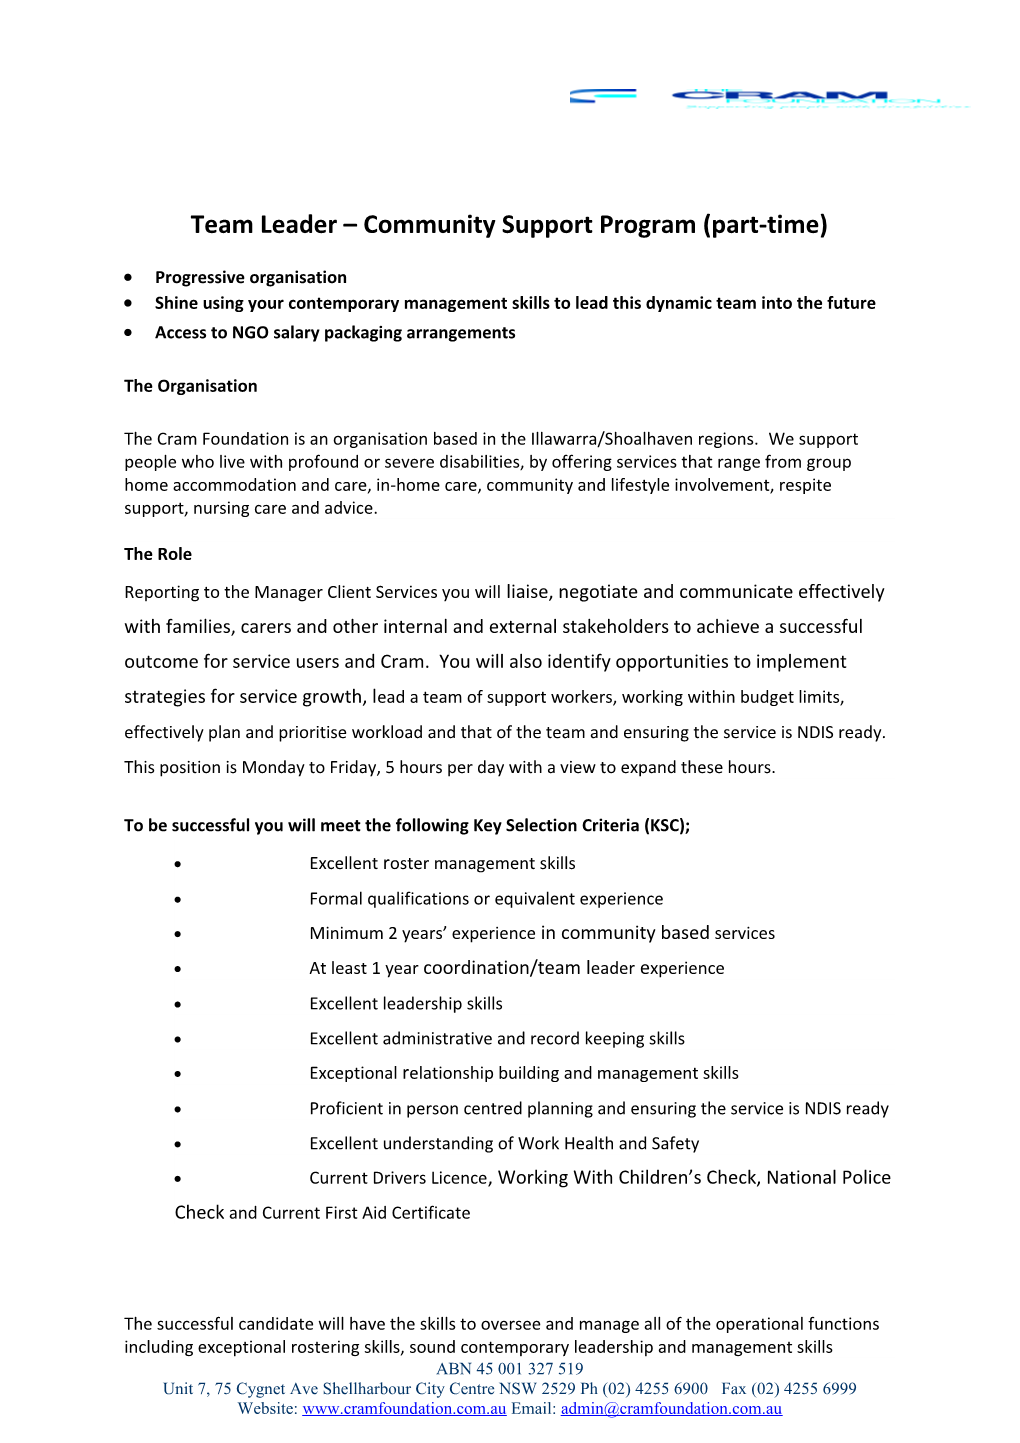 Team Leader Community Support Program(Part-Time)